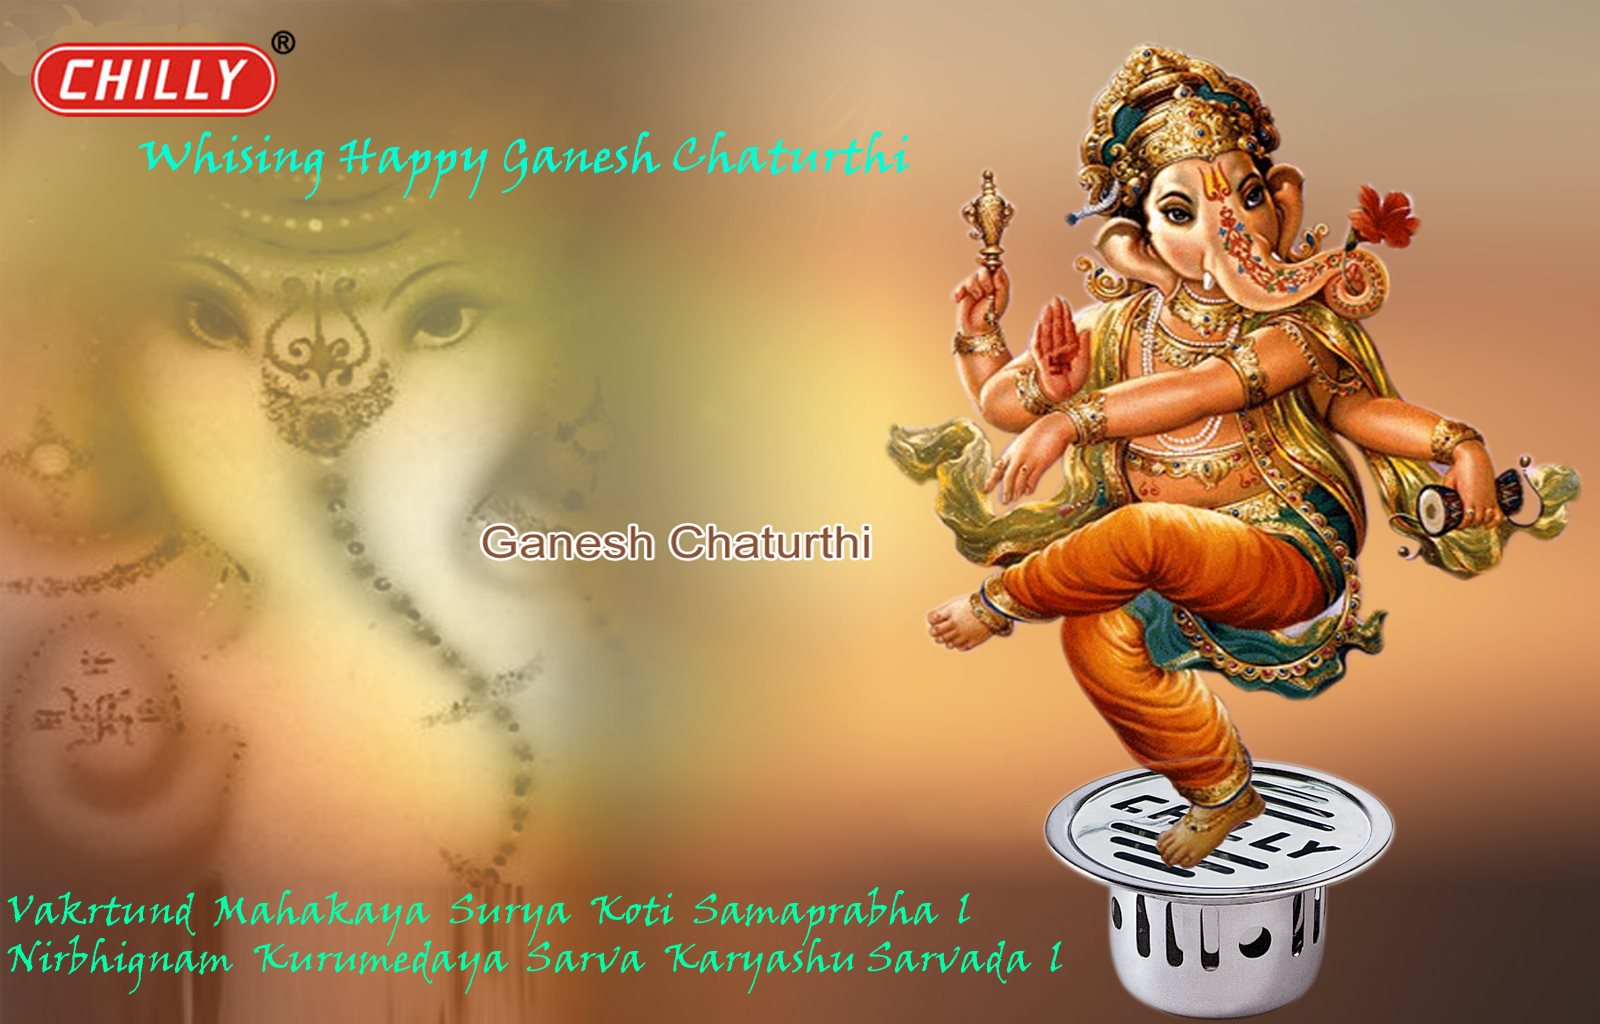 Wishing Happy Ganesh Chaturthi